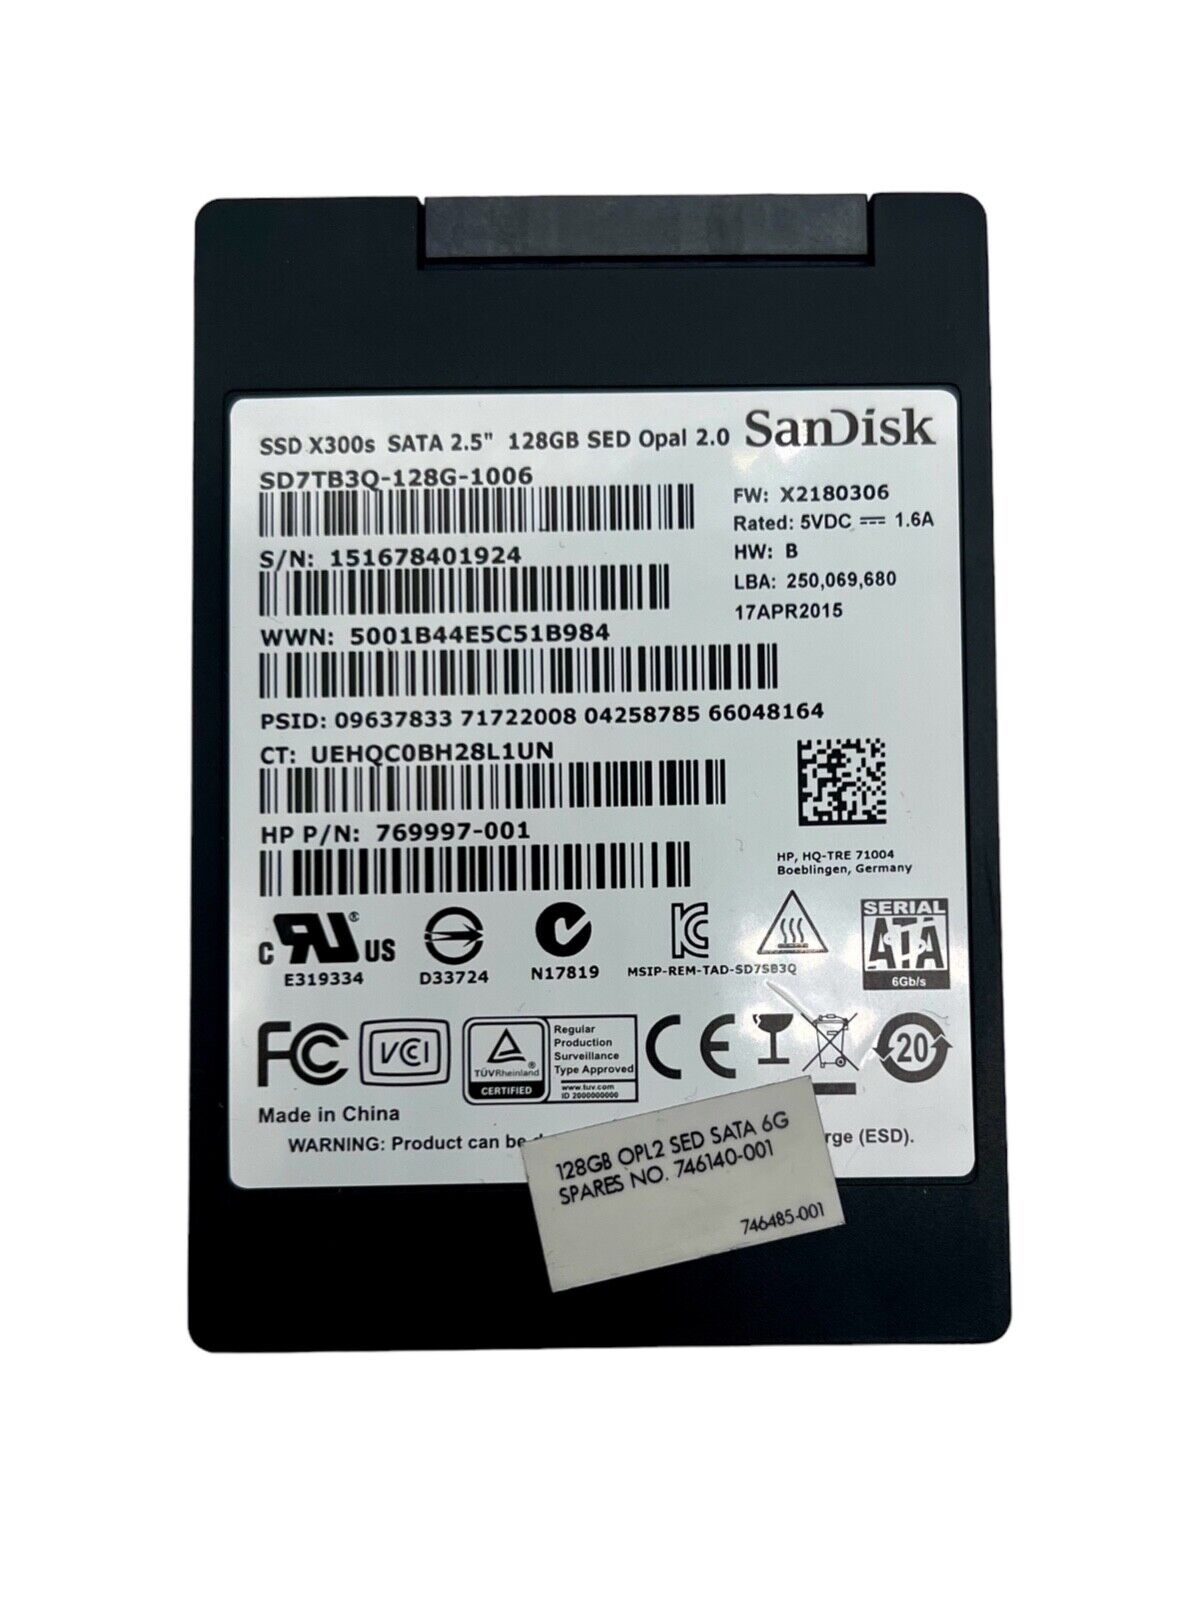 Sandisk X300  128GB 2.5\